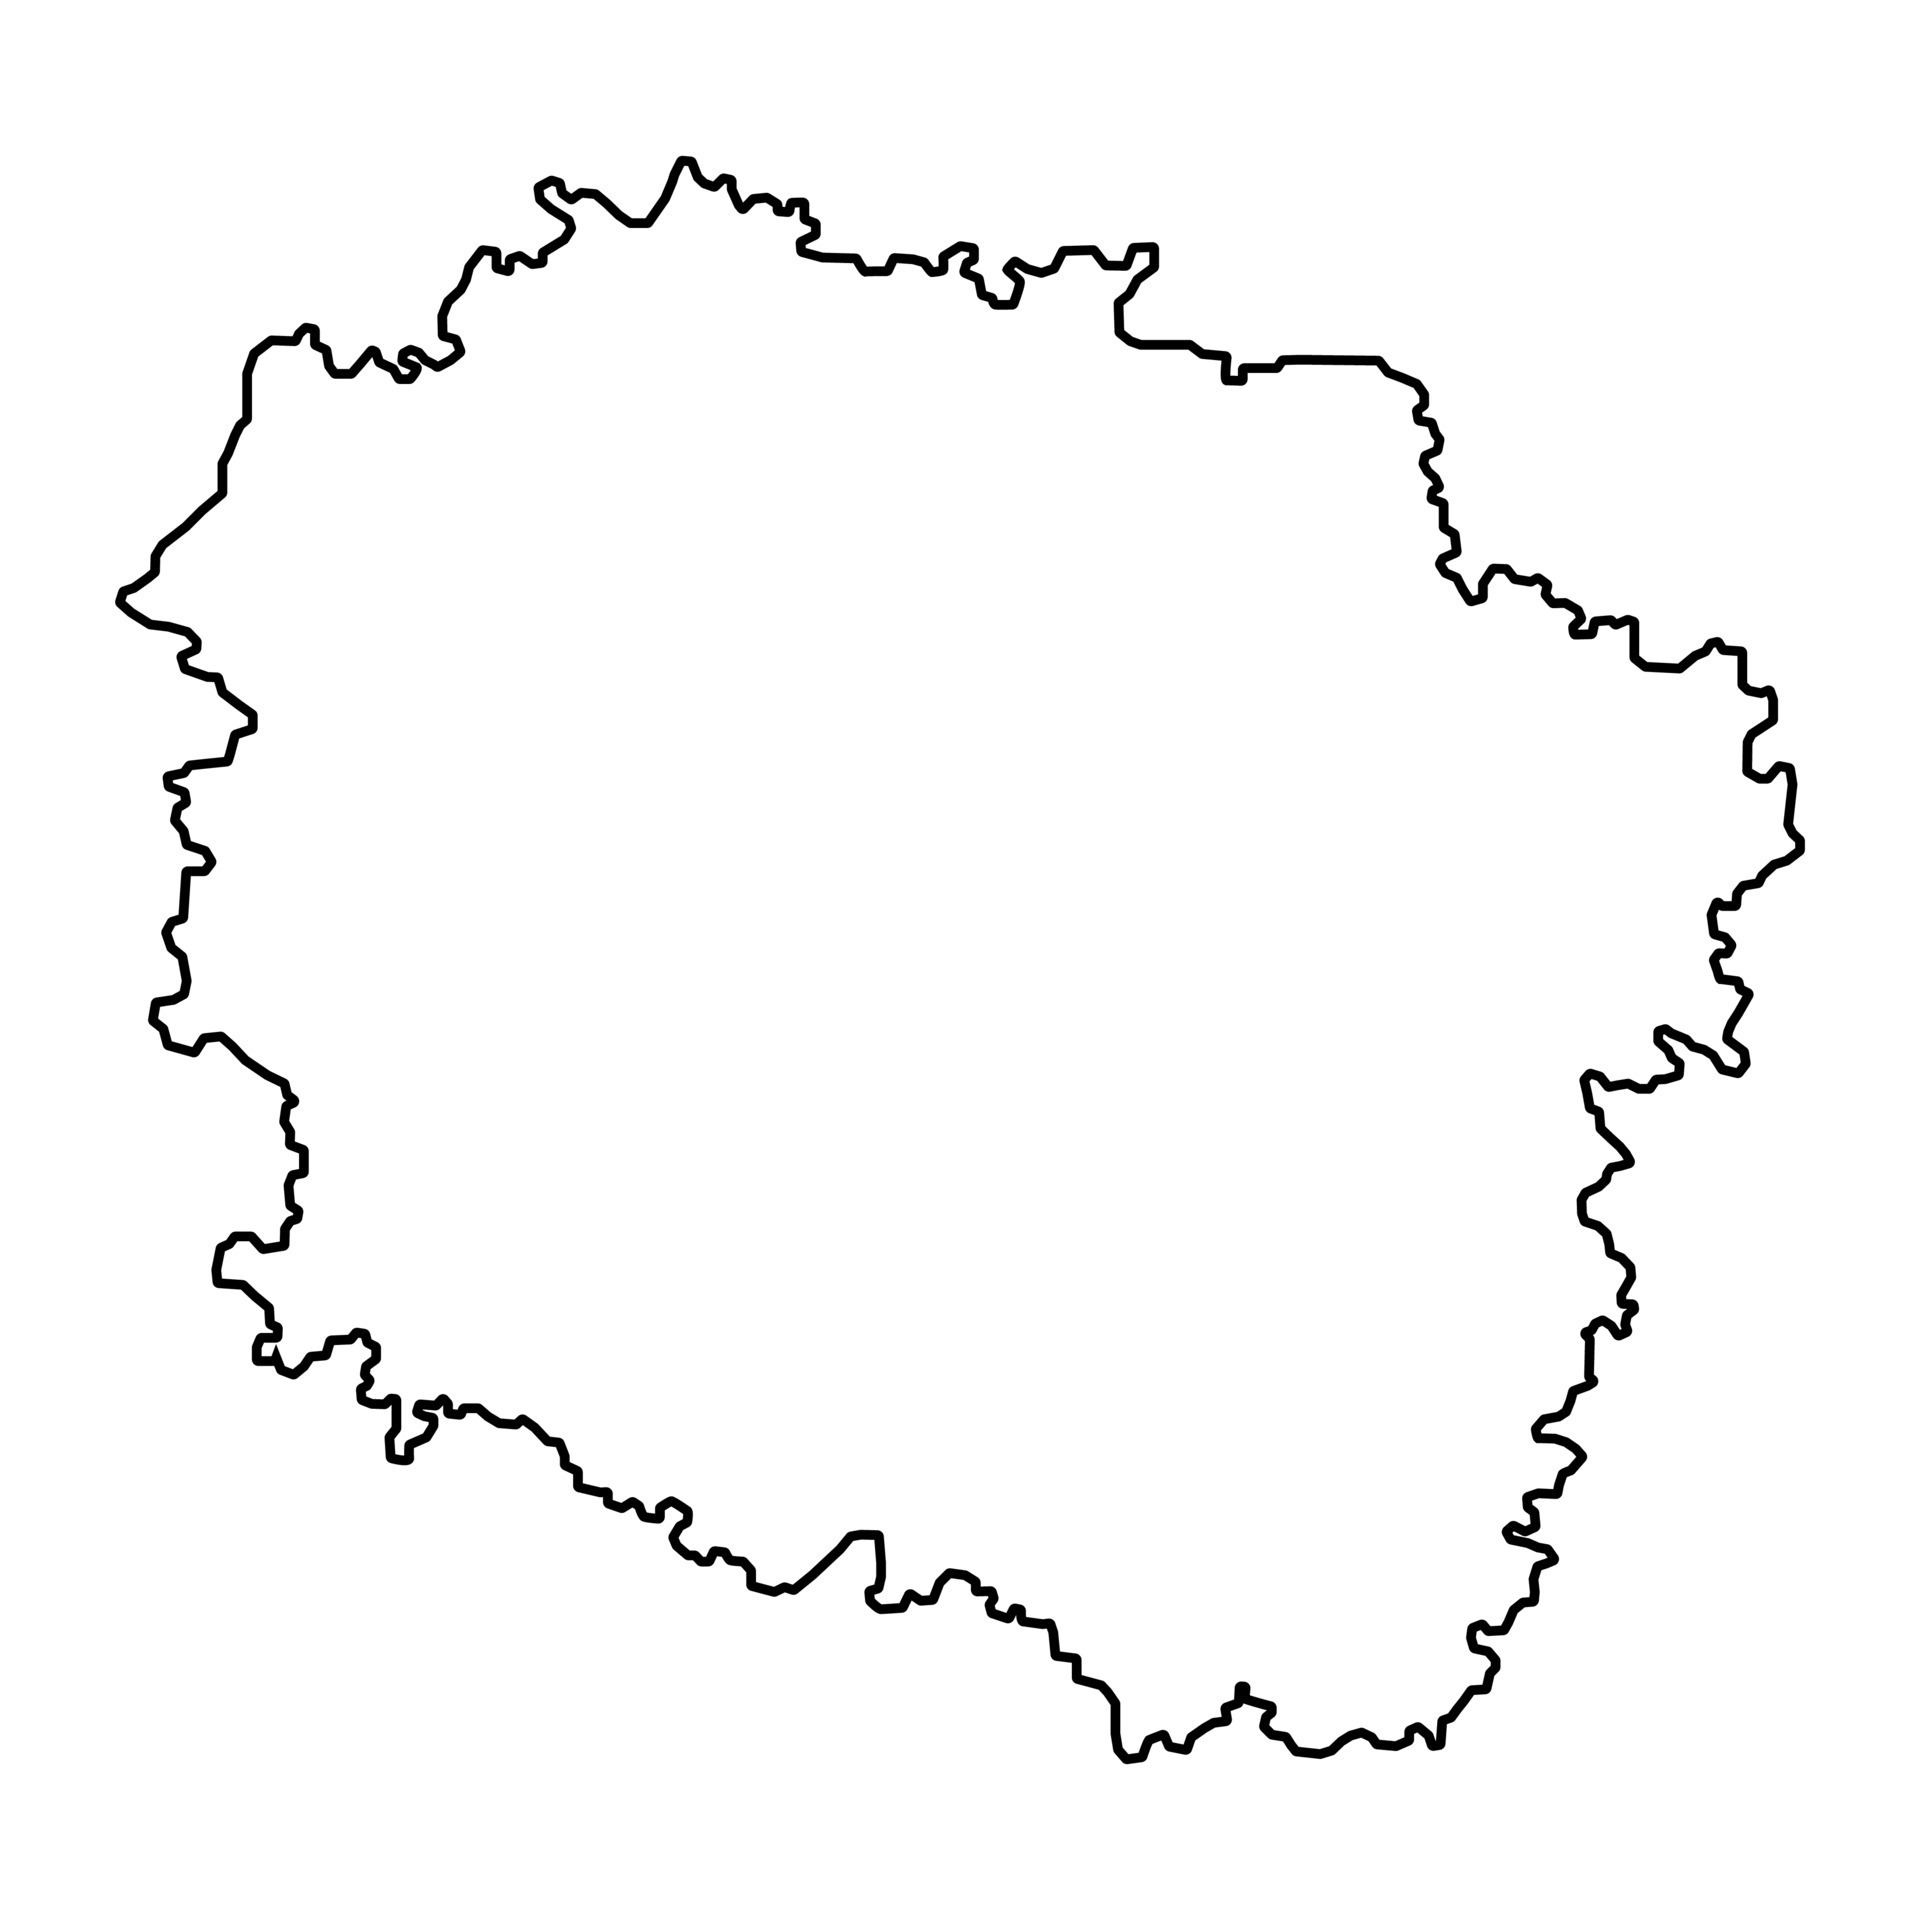 Kuyavian Pomeranian Voivodeship map, province of Poland. Vector  illustration. 22589559 Vector Art at Vecteezy